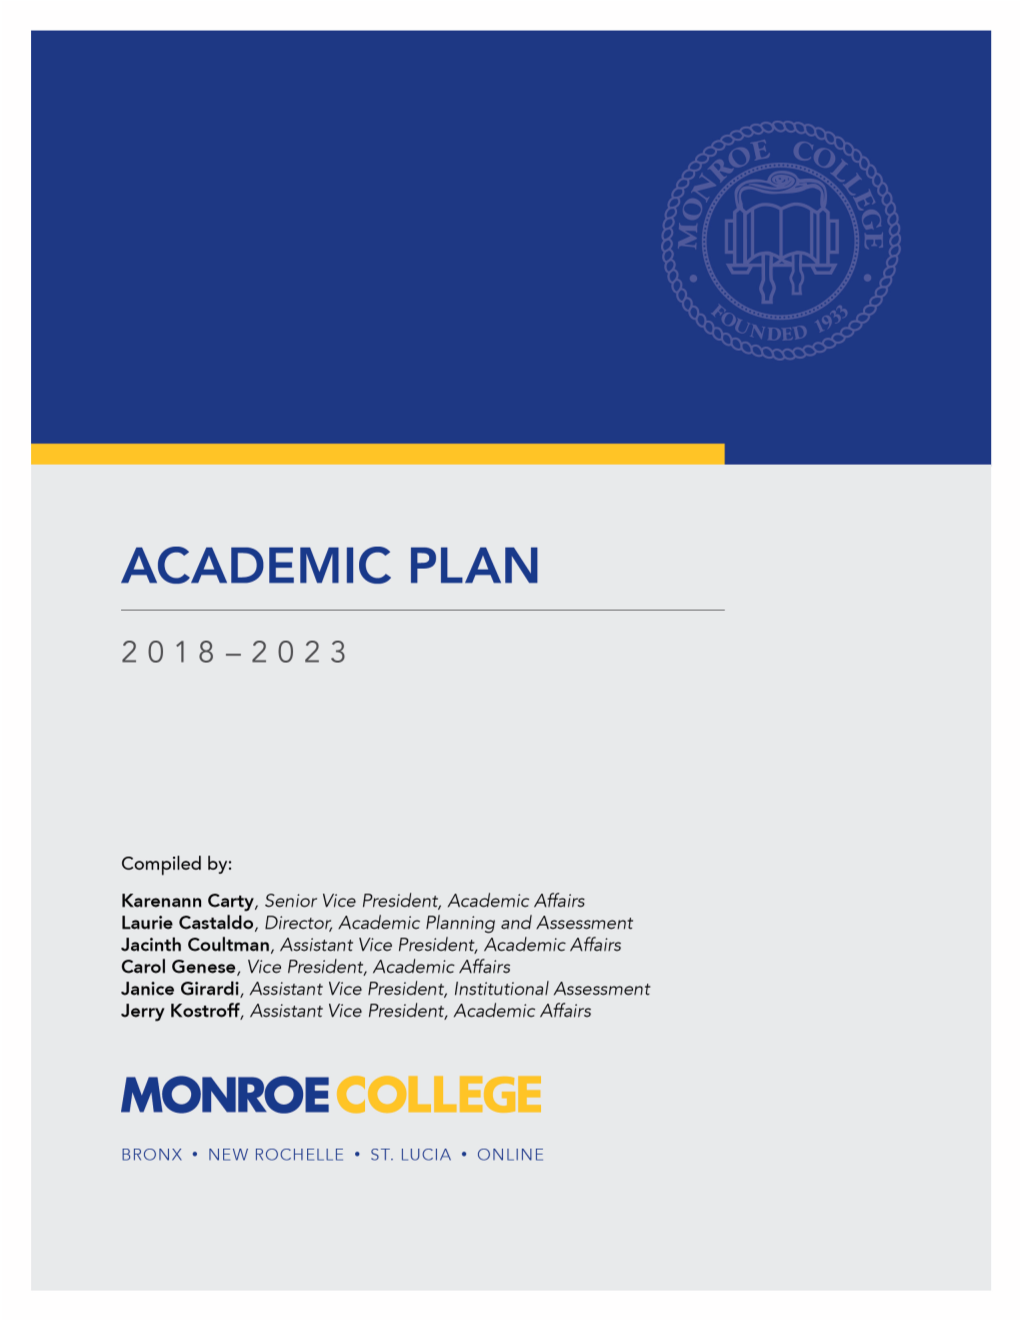 Academic Plan 2018-2023